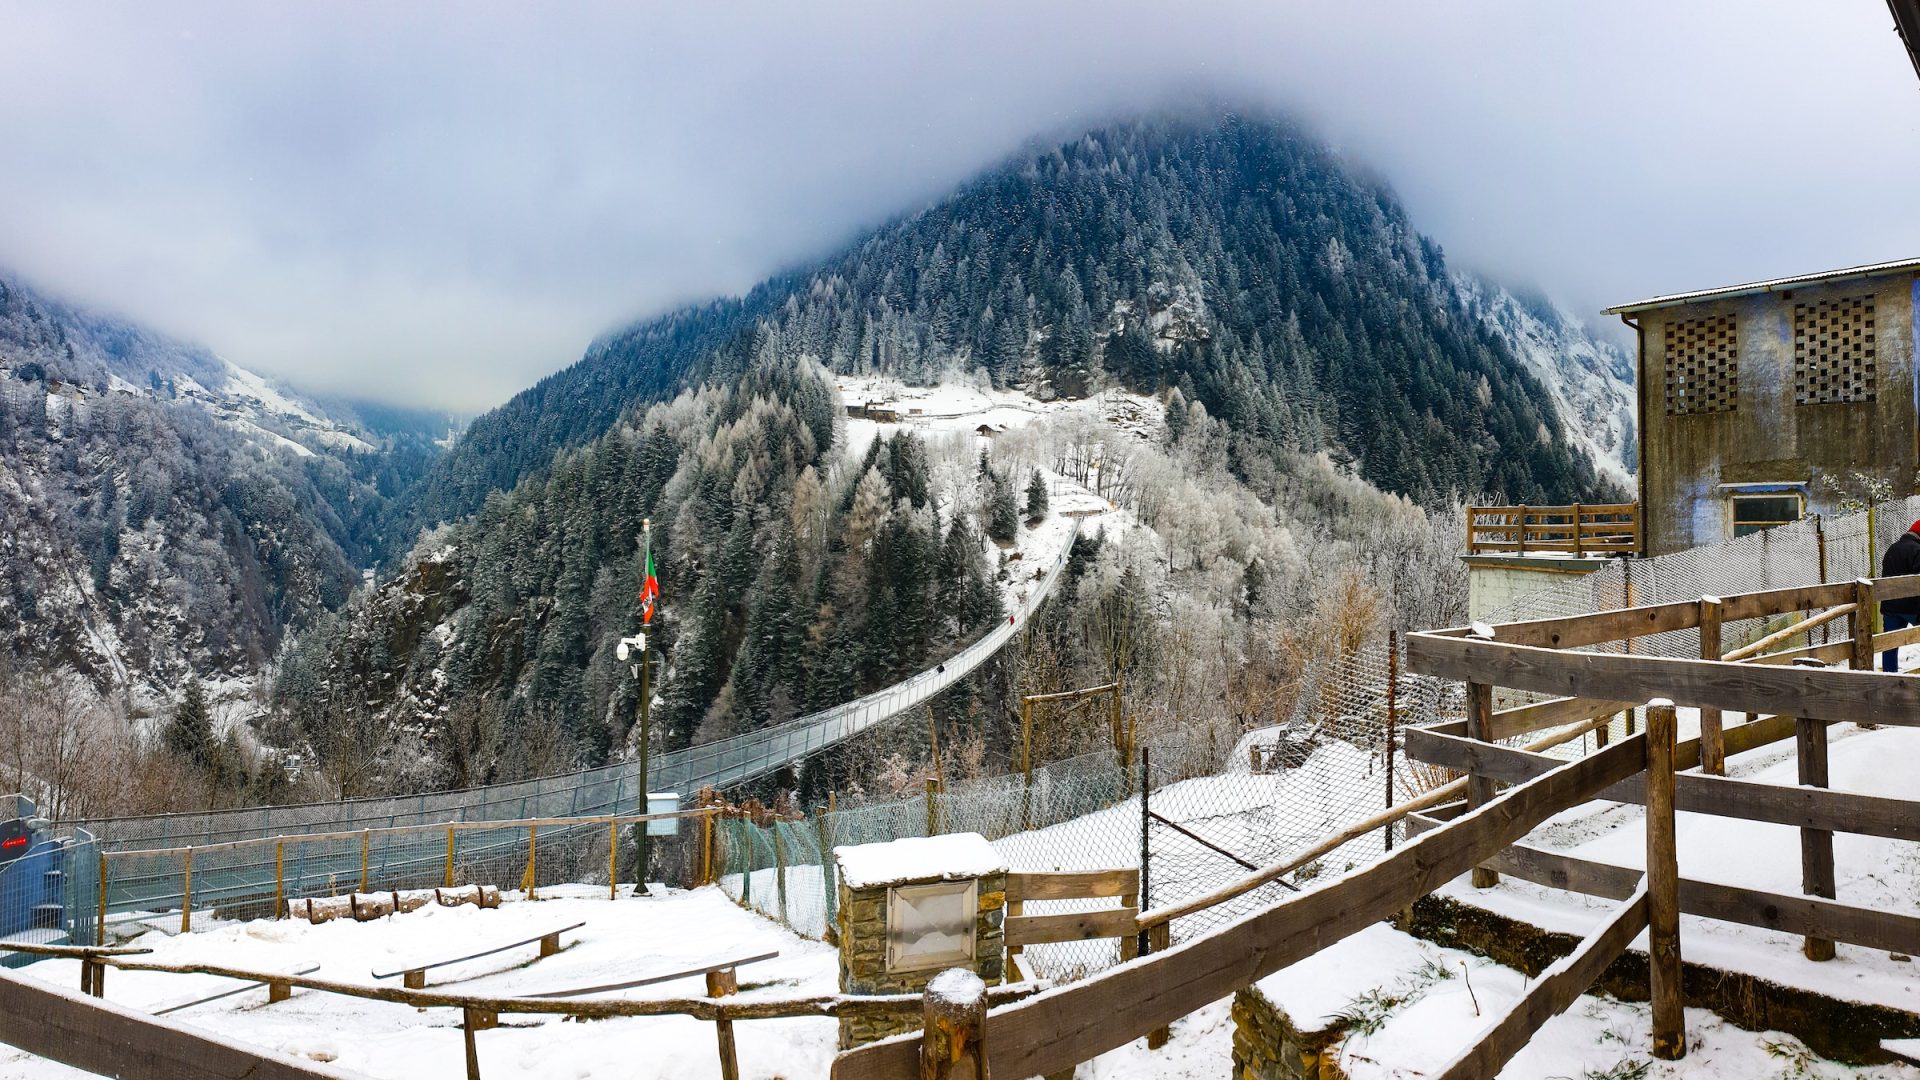 For some European ski resorts, winter isn’t worth it anymore